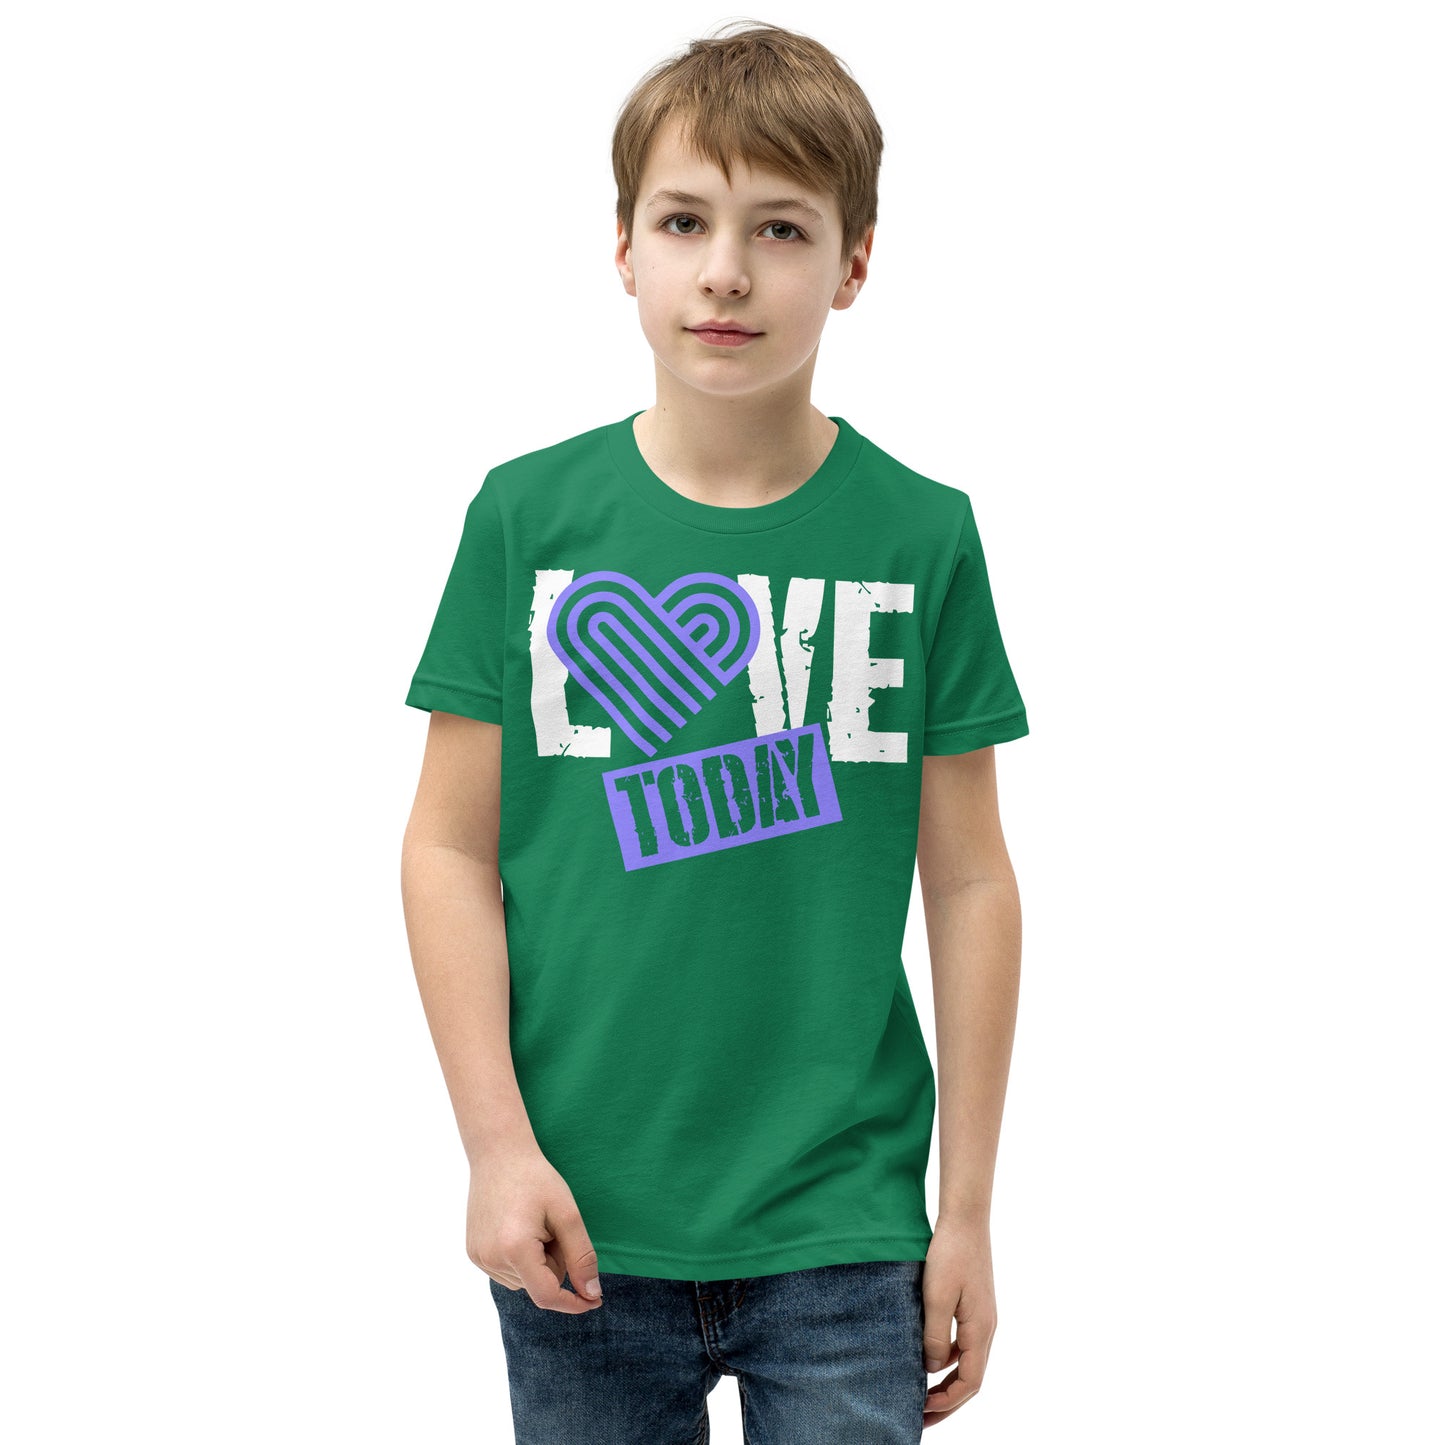 Logolove Youth T-Shirt